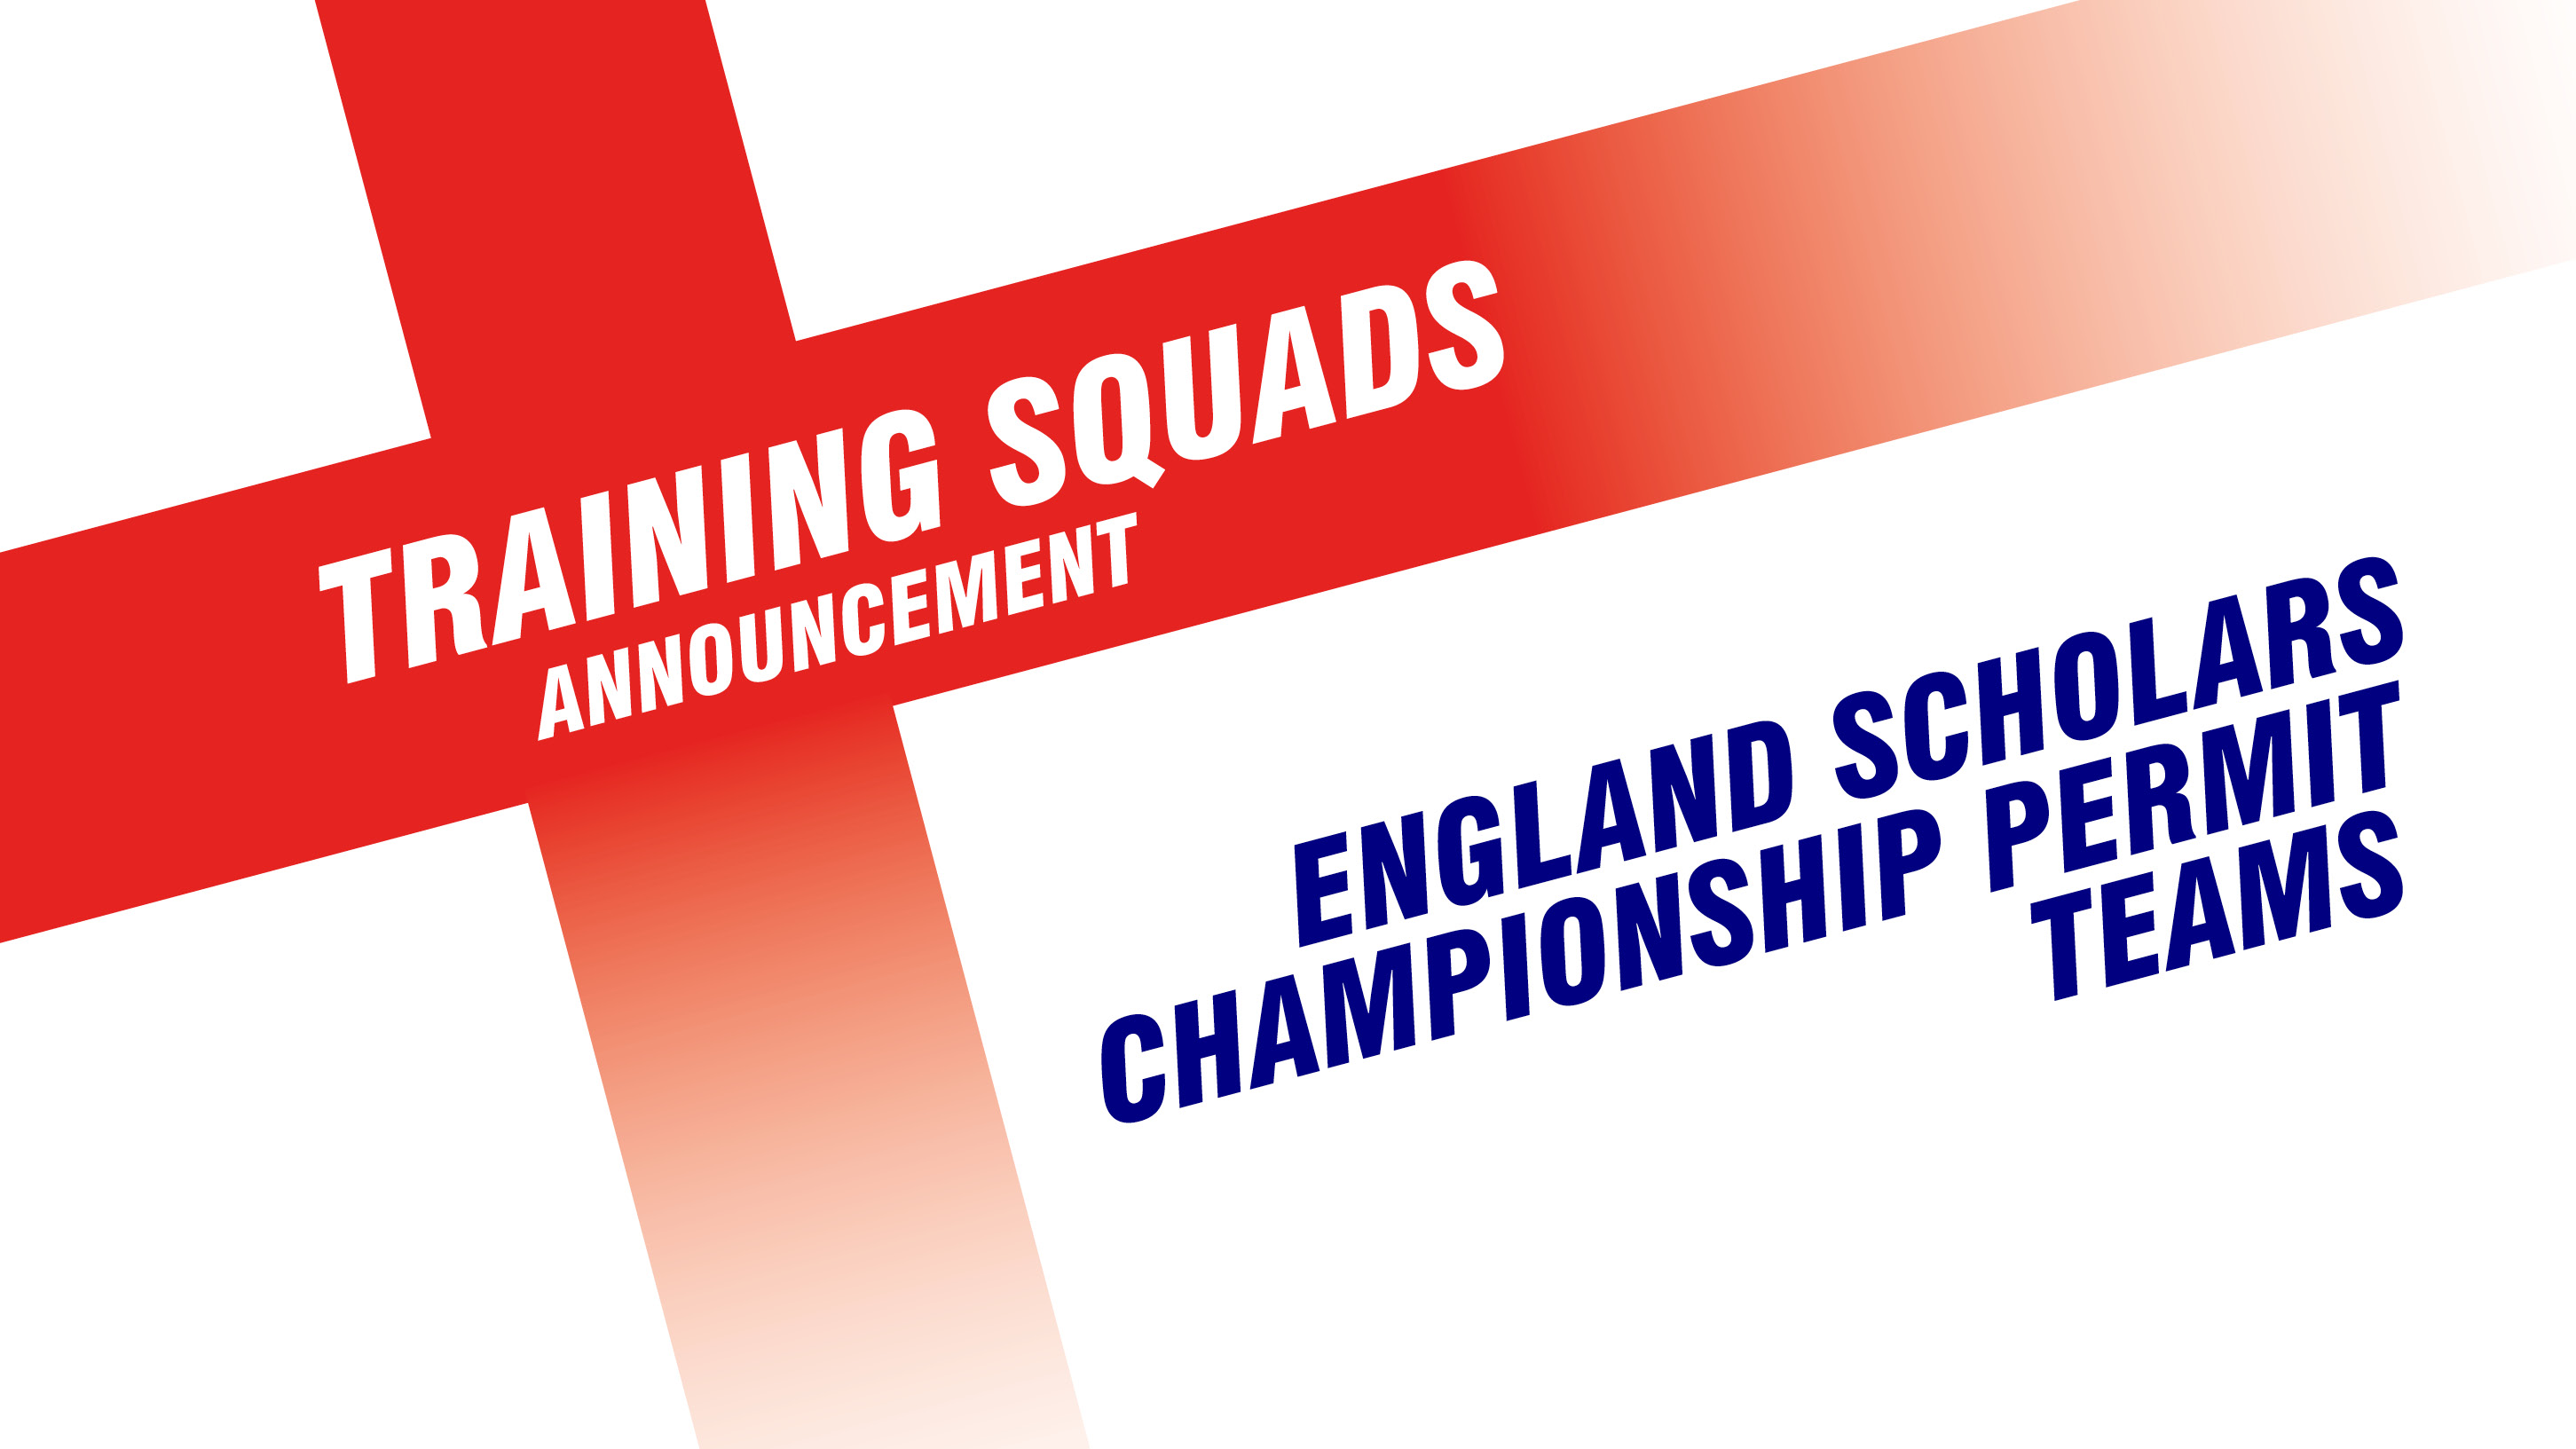 England Scholars training squads announced